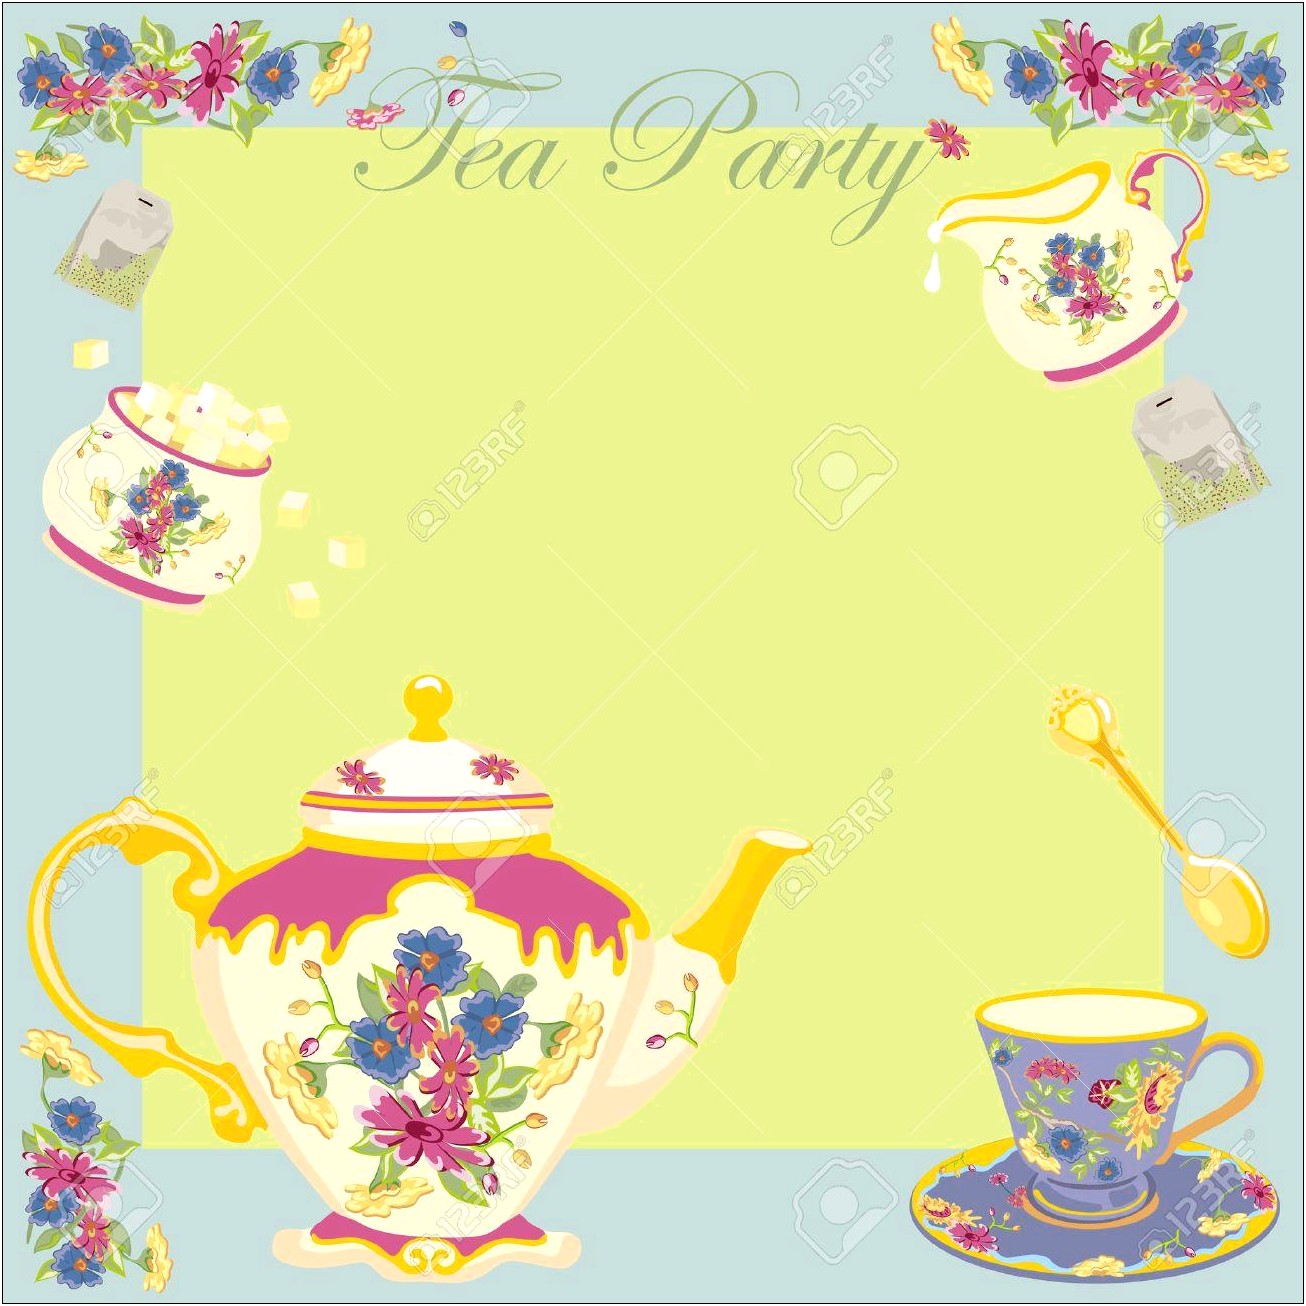 High Tea Party Invitation Template Free